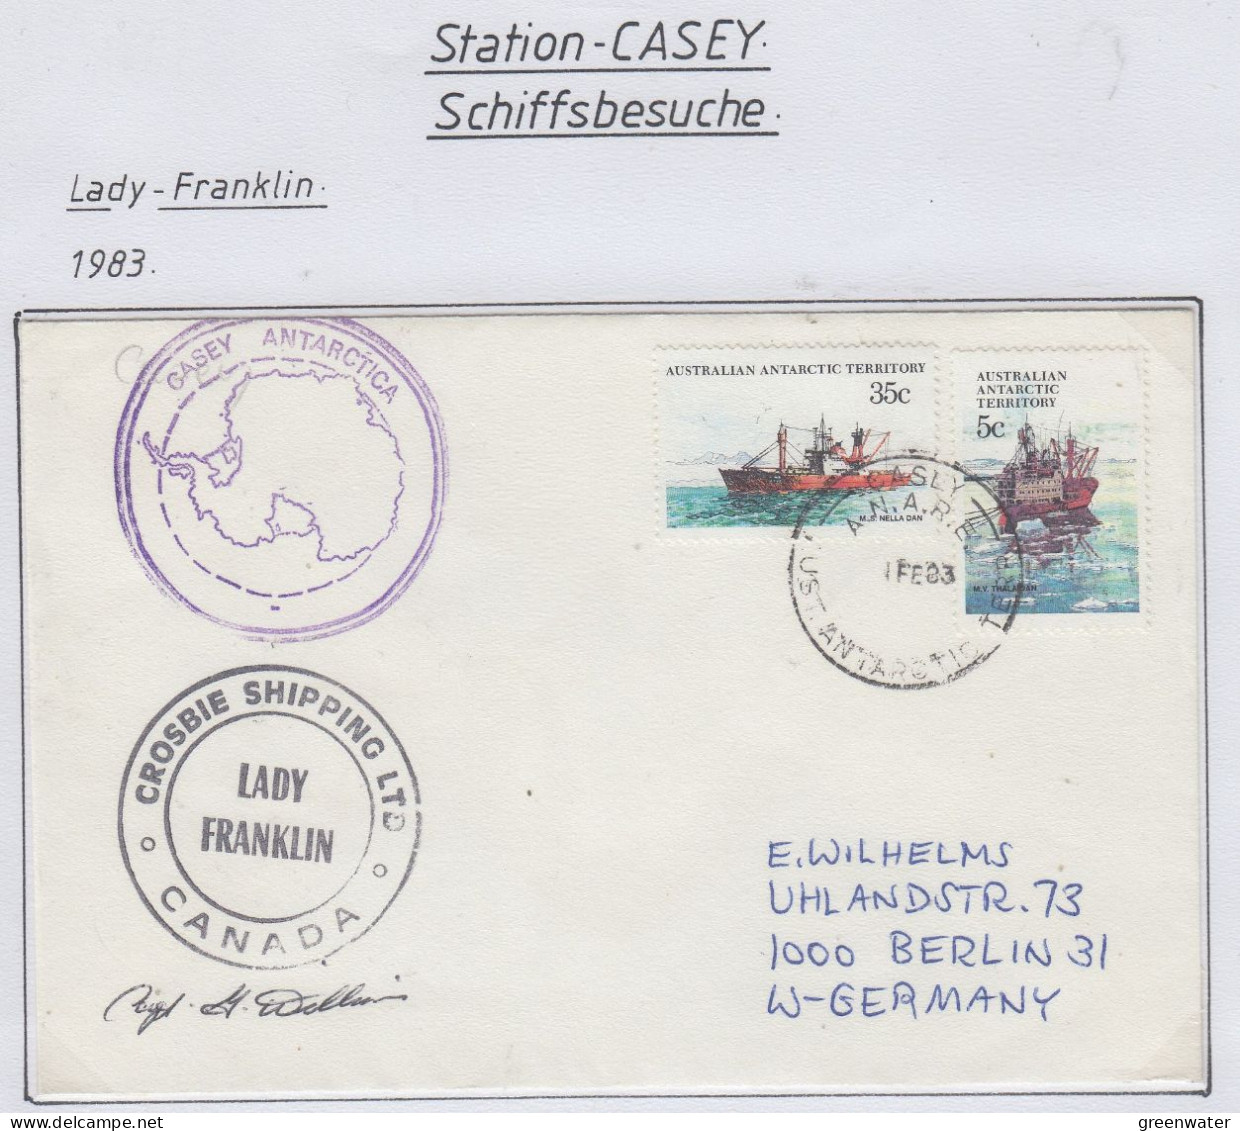 AAT  Ship Visit Lady Franklin Signature Ca Casey 1 FE 1983 (CS161) - Covers & Documents